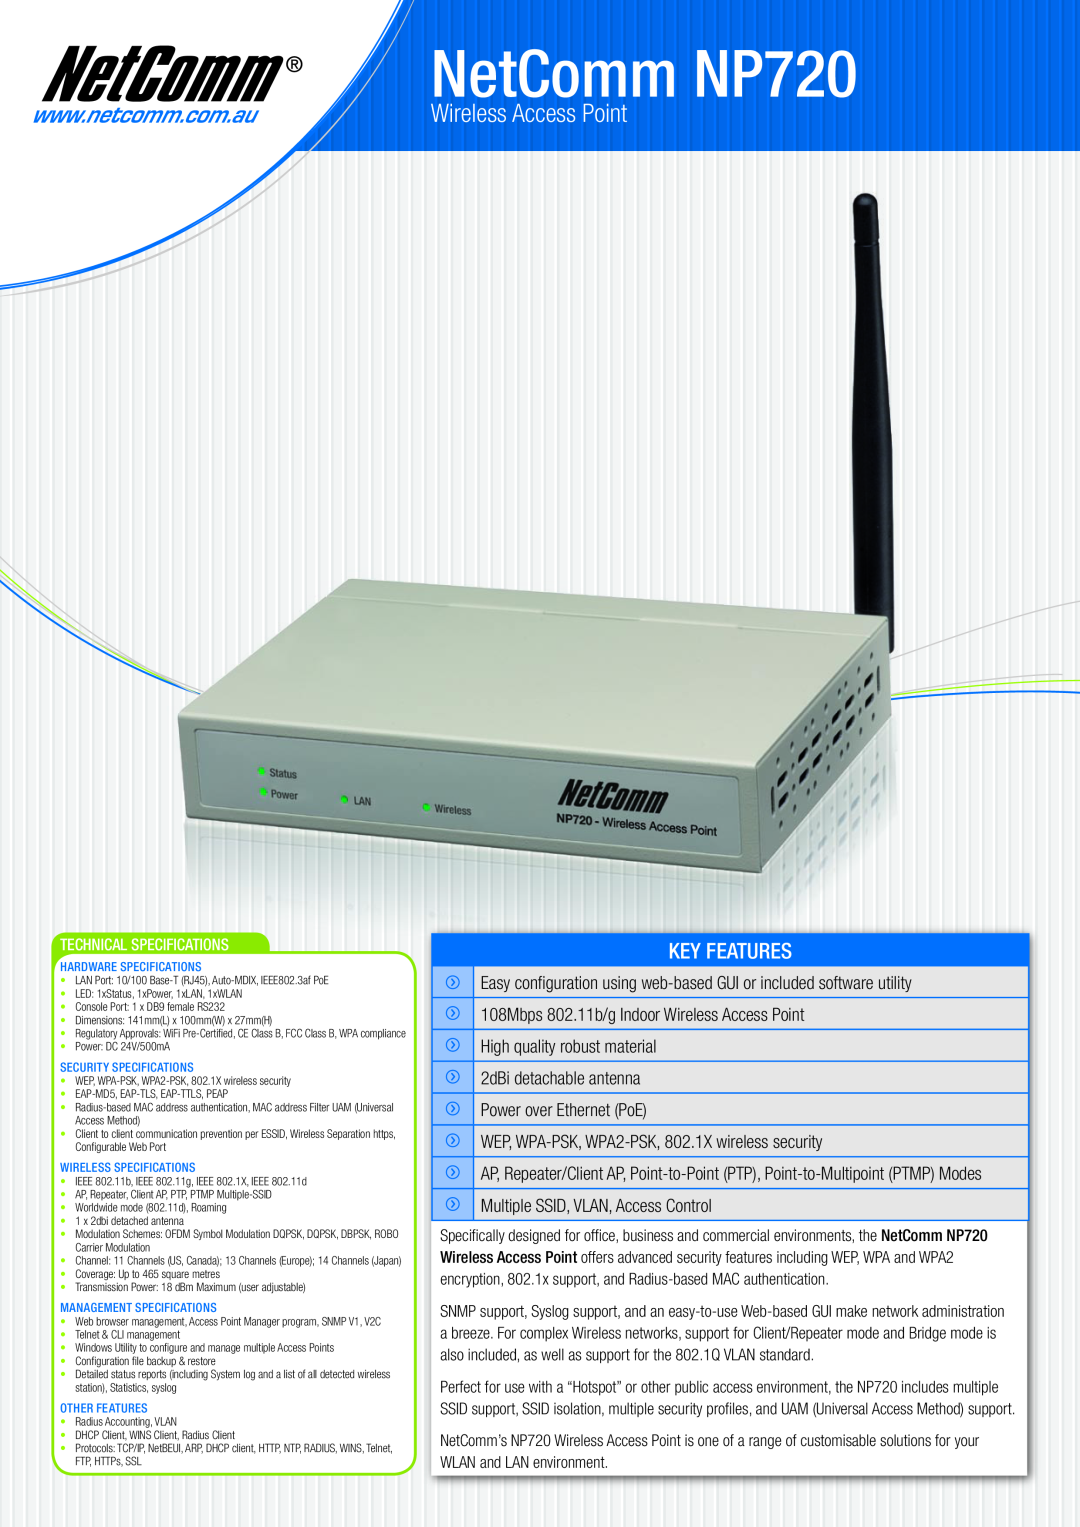 NetComm technical specifications NetComm NP720, Wireless Access Point, Technical Specifications, Key Features 